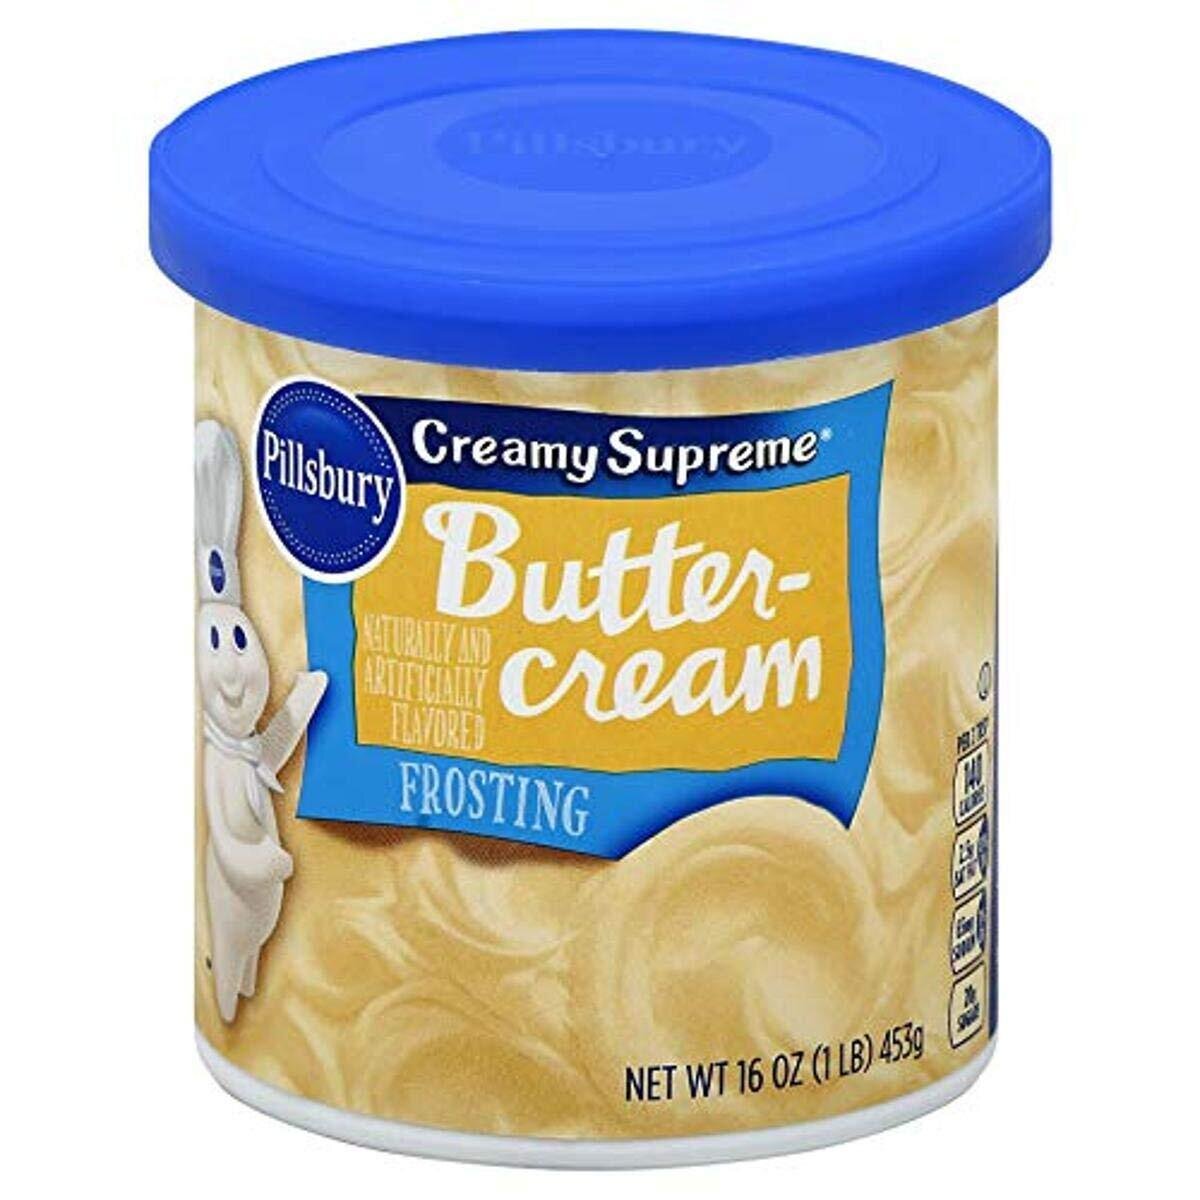 Pillsbury Butter Cream Creamy Supreme Frosting - 453g